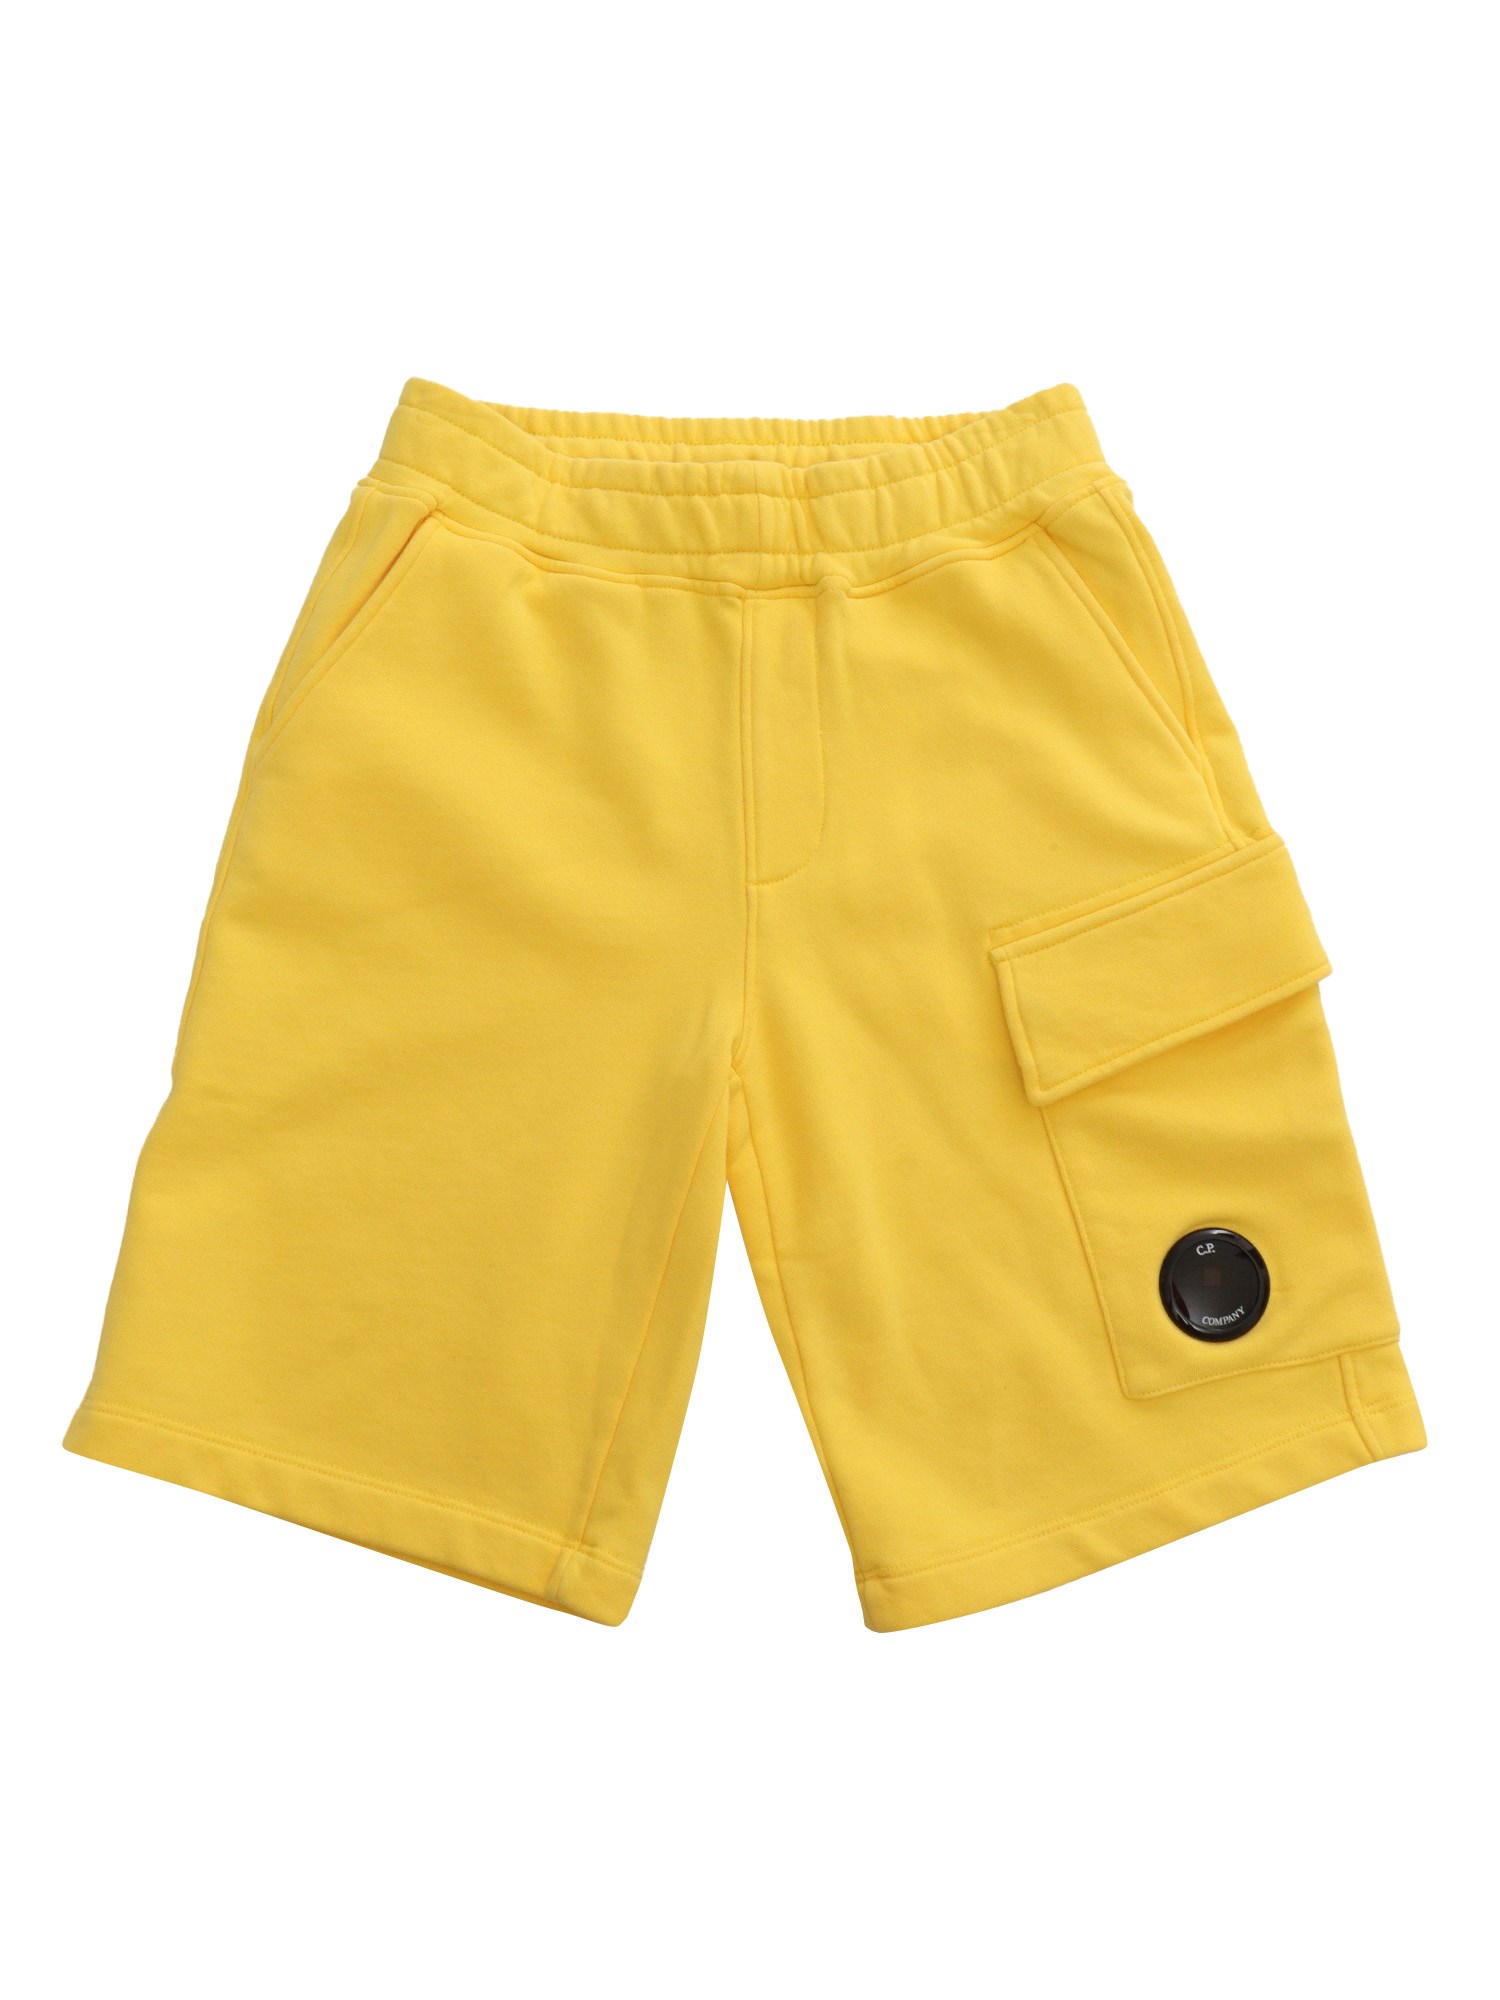 C.p. Company Yellow Fleece Shorts